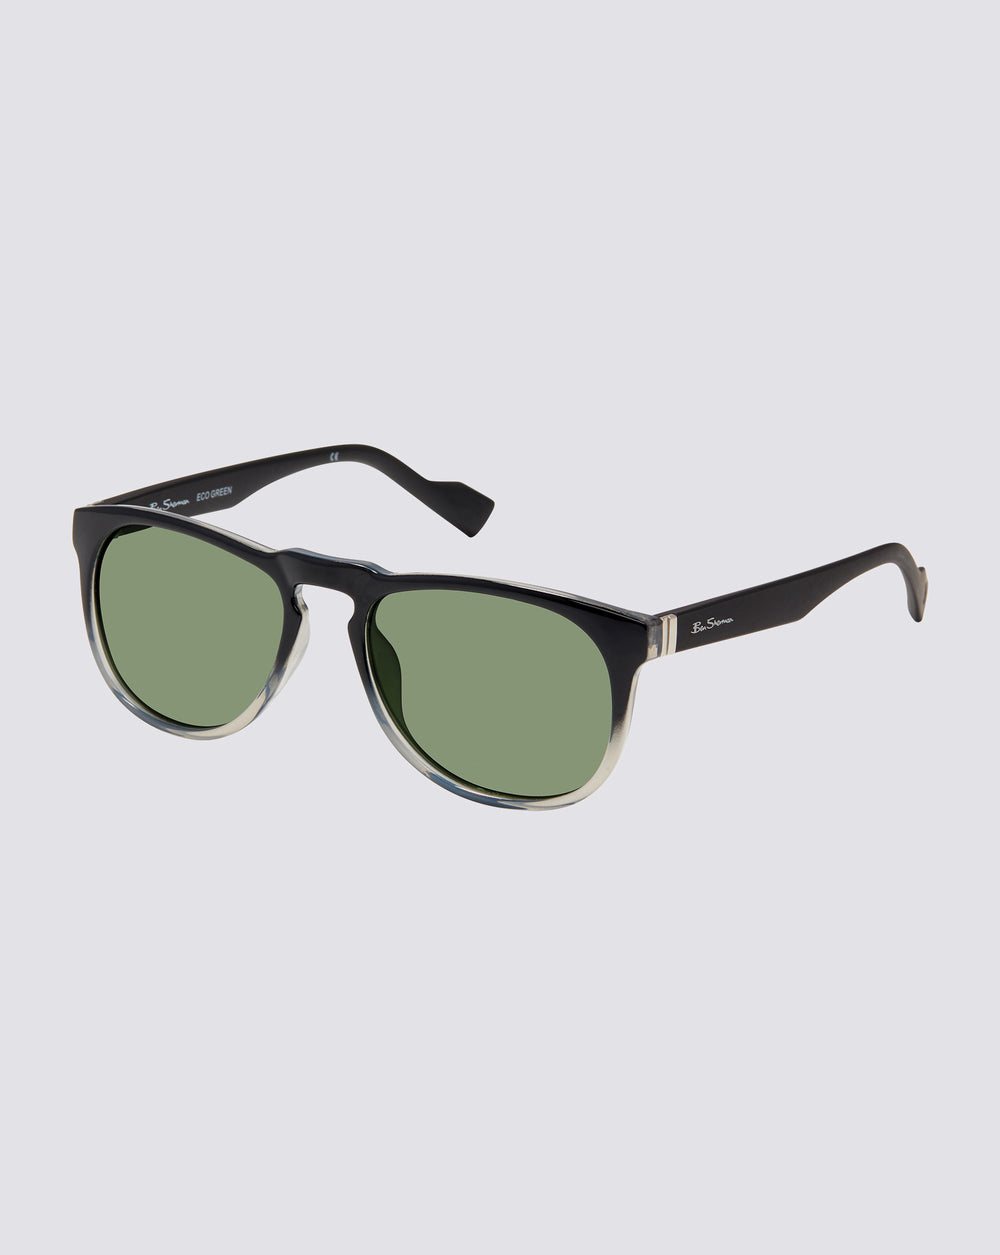 Charles Polarized Eco-Green Sunglasses - Black Fade